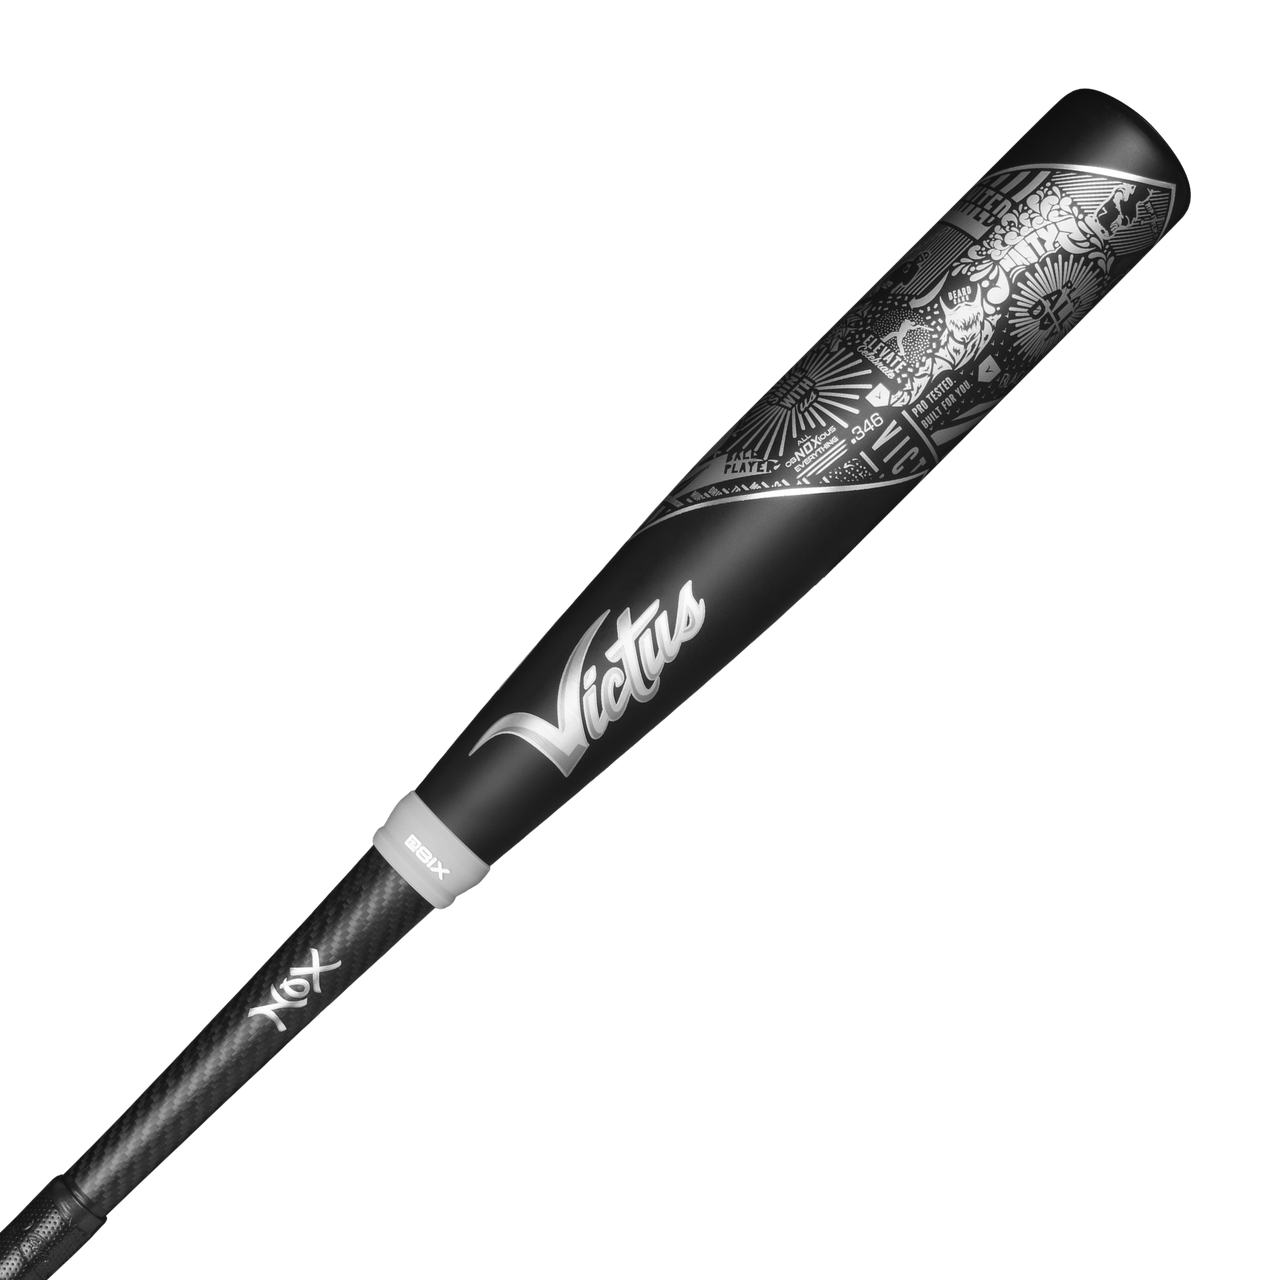 victus-nox-2-bbcor-baseball-bat-32-inch-29-oz VCBN2-3229   The NOX 2 BBCOR bat is a two-piece hybrid design that